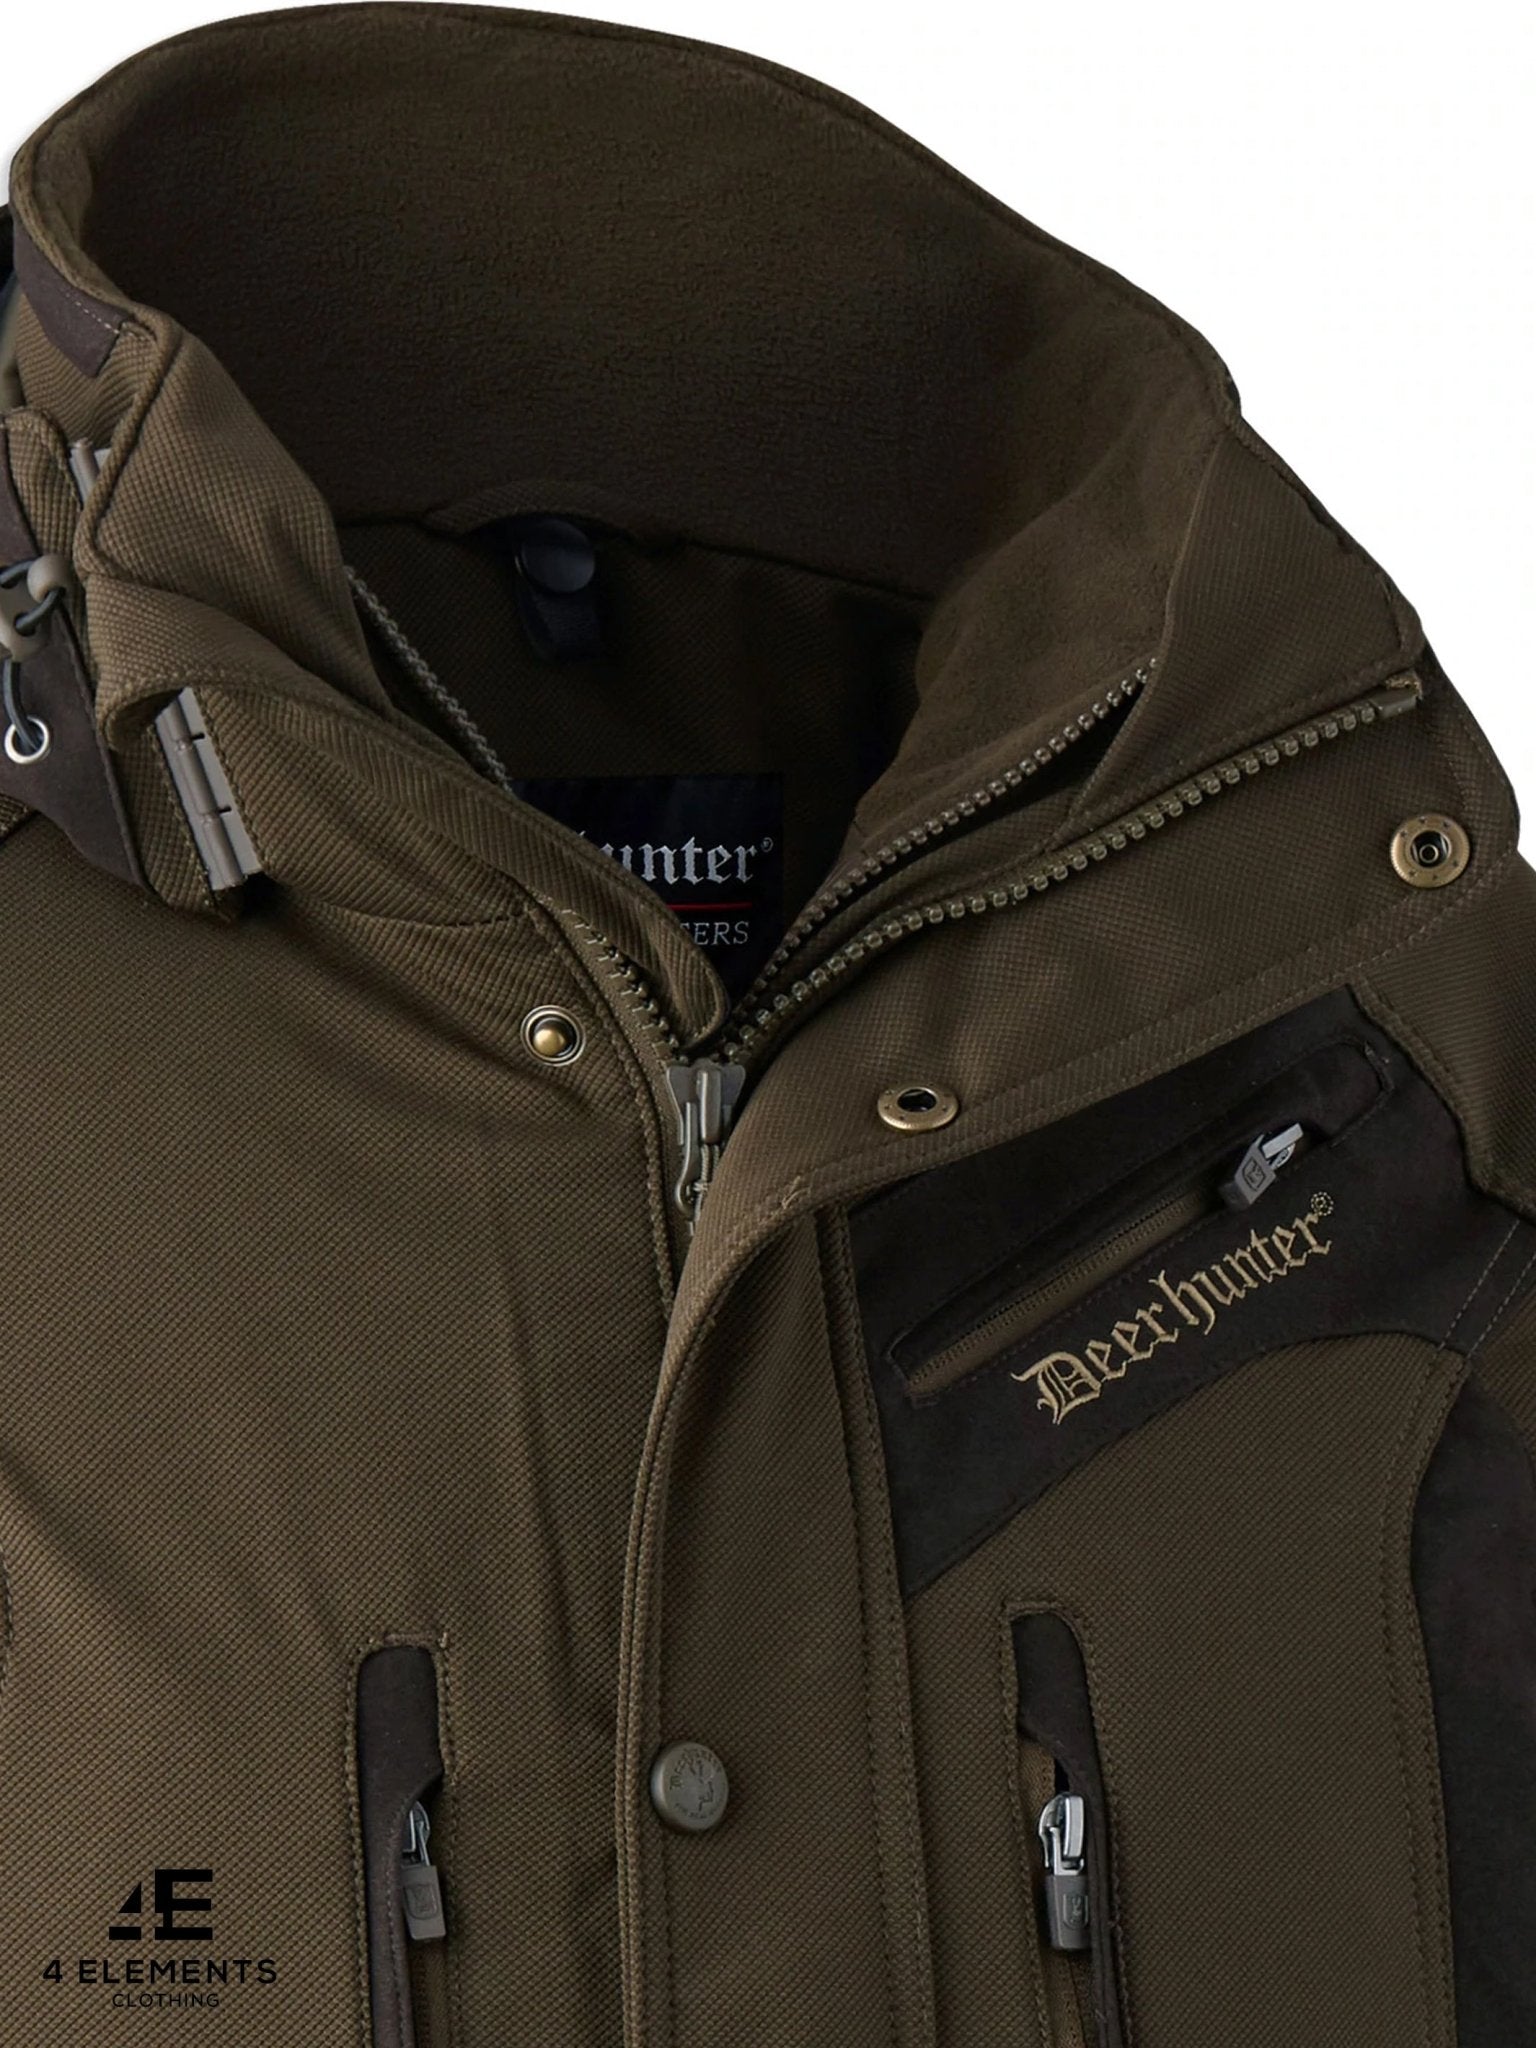 4elementsclothingDeerhunterDeerhunter - Muflon Waterproof Jacket / Coat 5822Outerwear5822-376-48